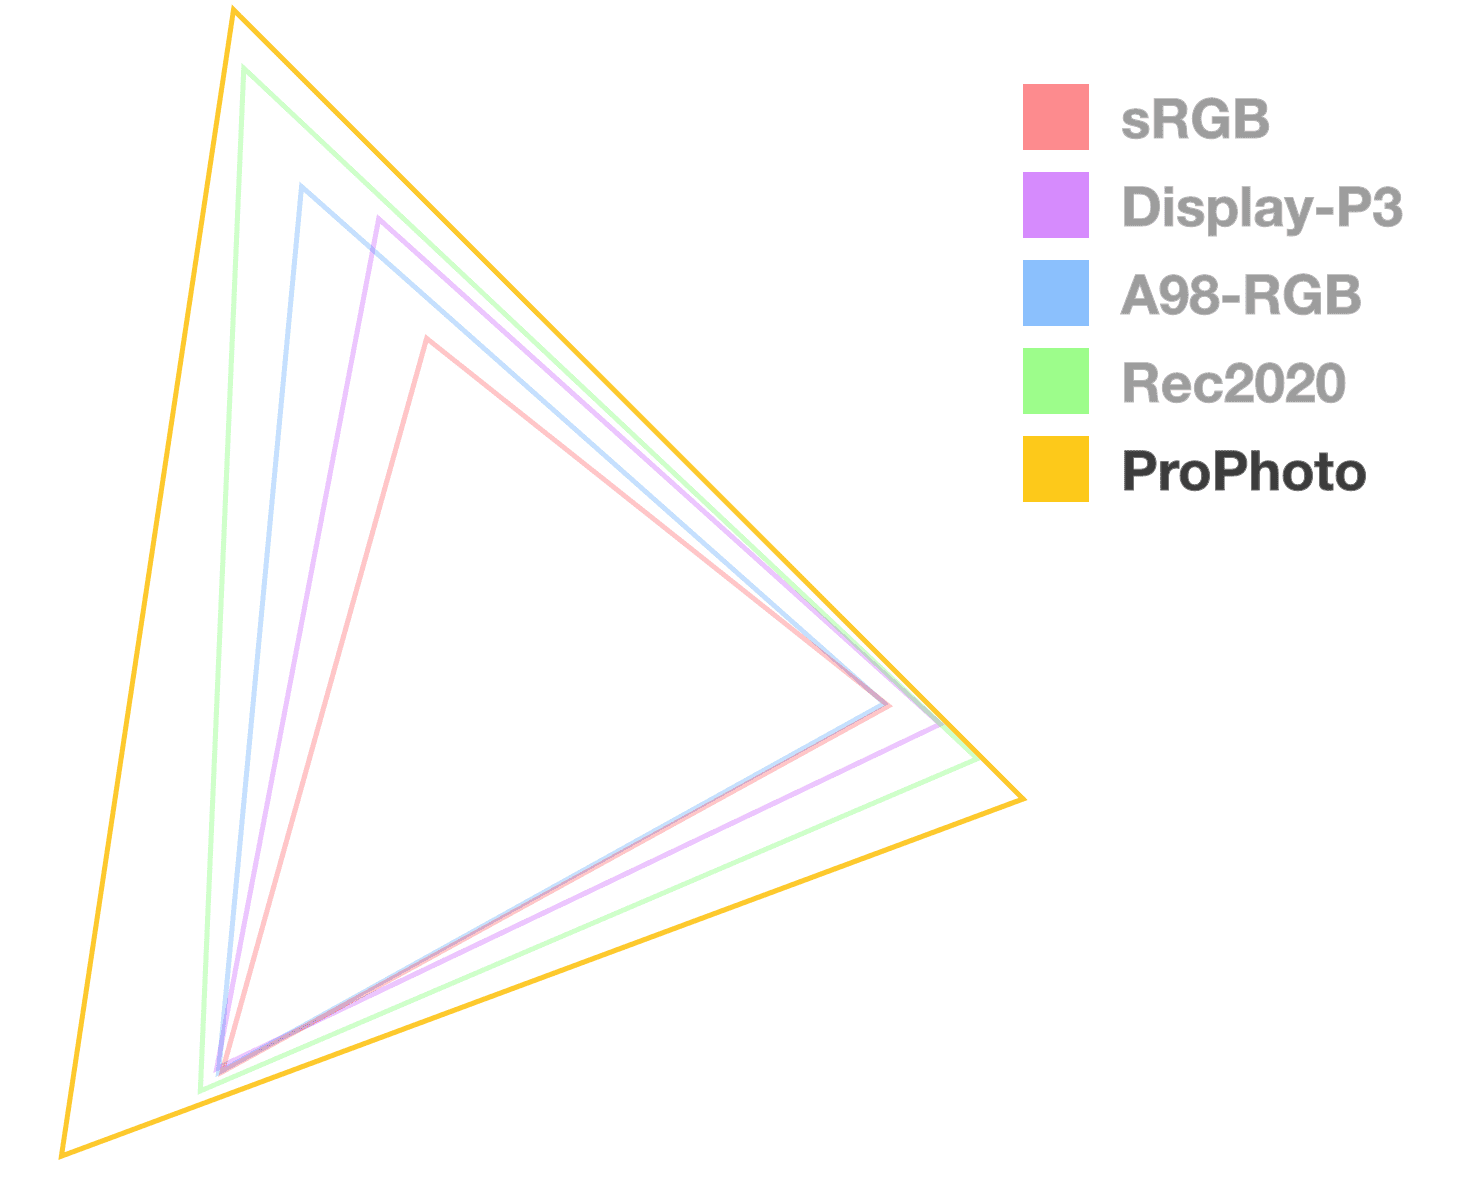 ProPhoto 삼각형은 유일하게 완전히 불투명한 삼각형으로, 색 영역의 크기를 시각화하는 데 도움이 됩니다. 제일 큰 것 같아요.